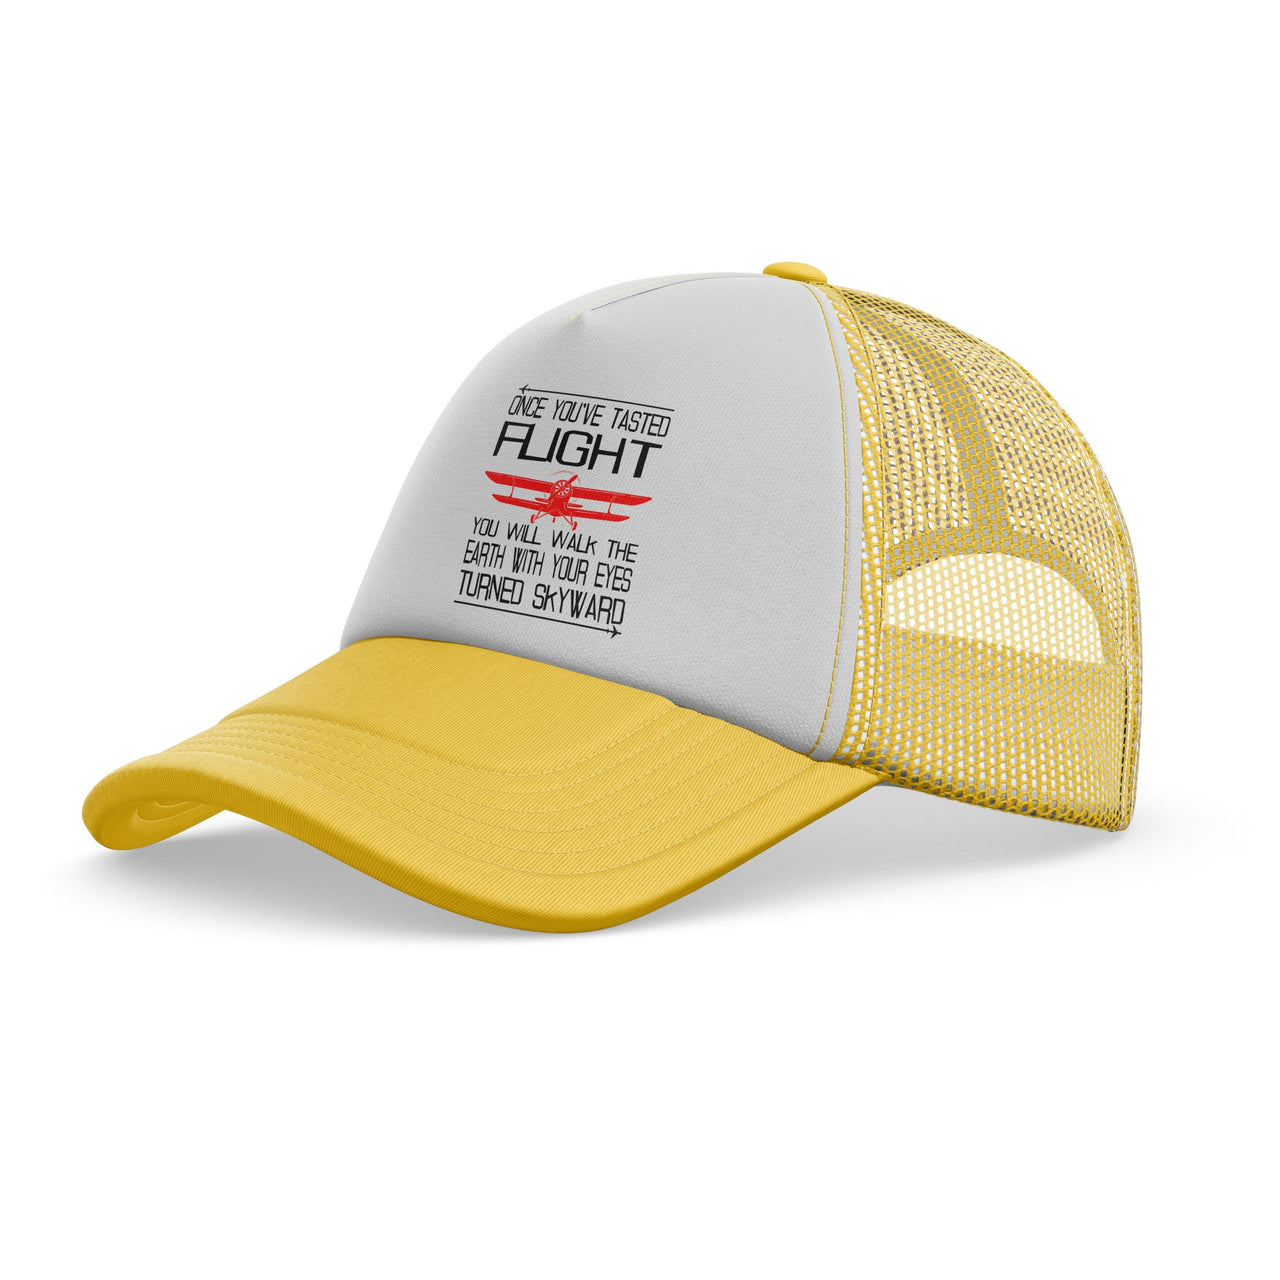 Once You've Tasted Flight Designed Trucker Caps & Hats